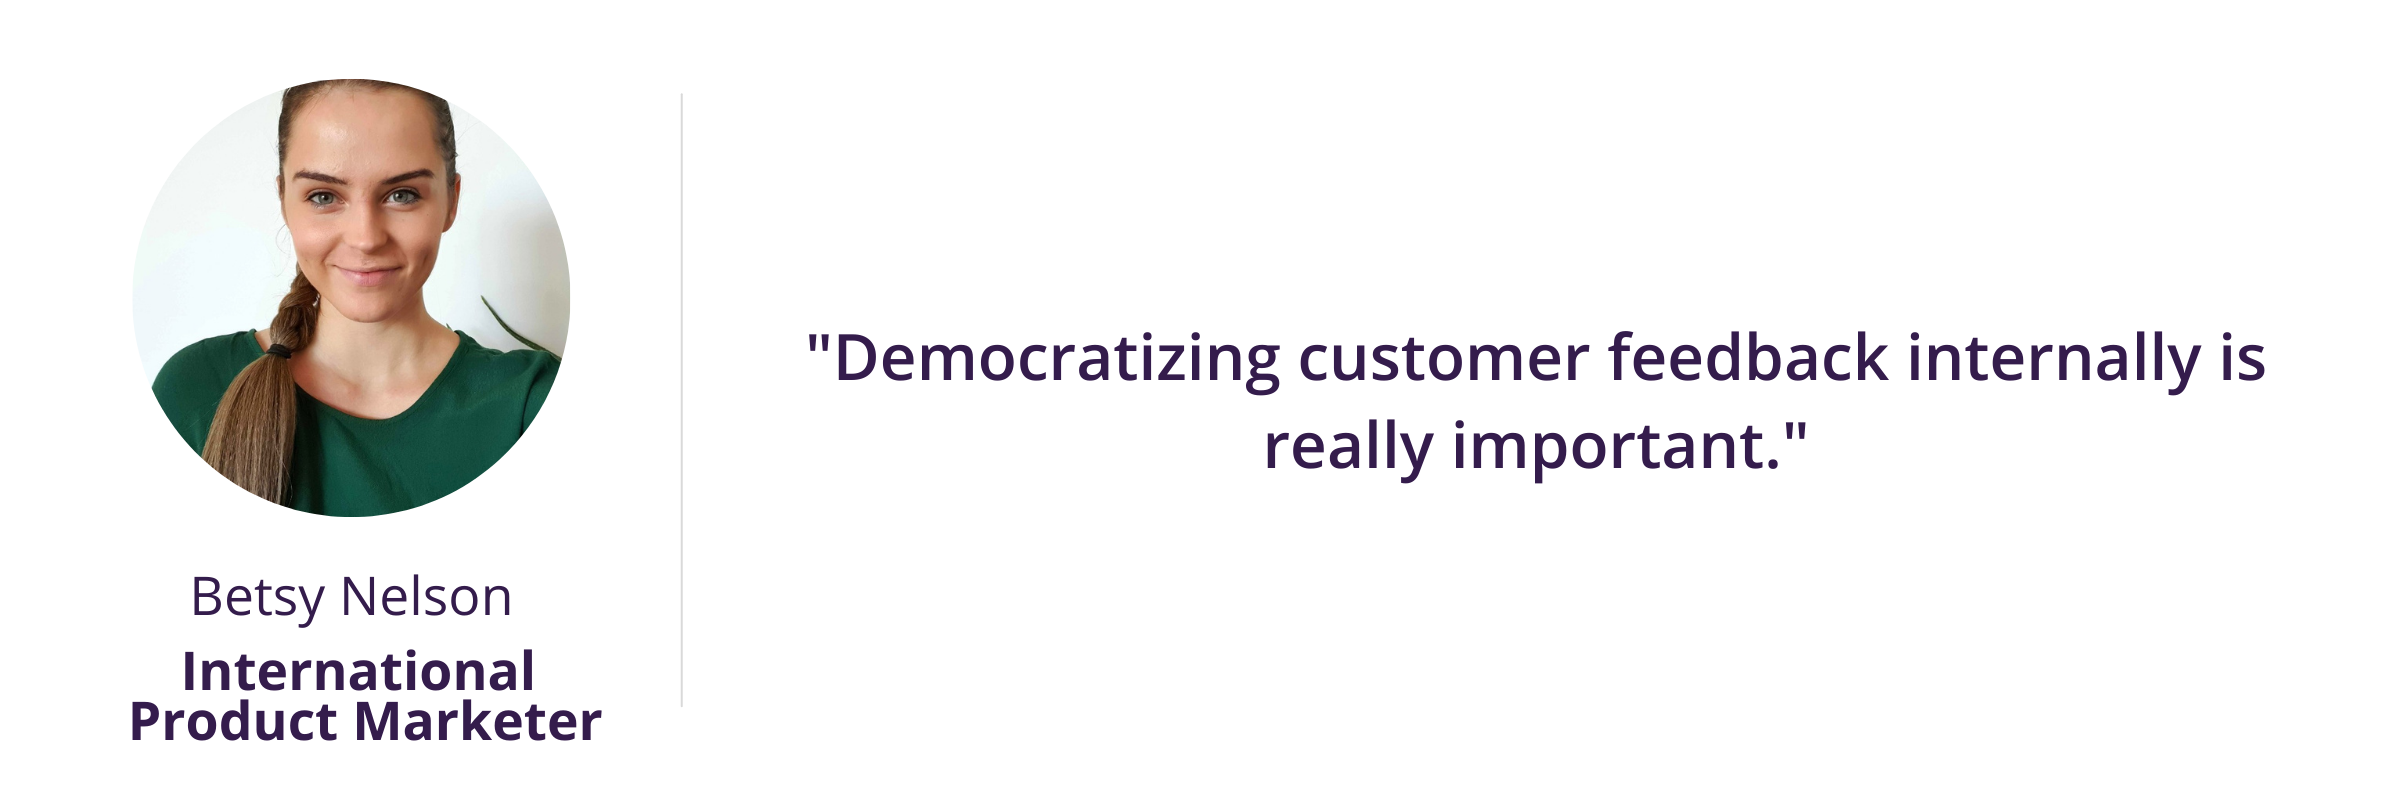 Design thinking: "Democratizing customer feedback internally is really important."